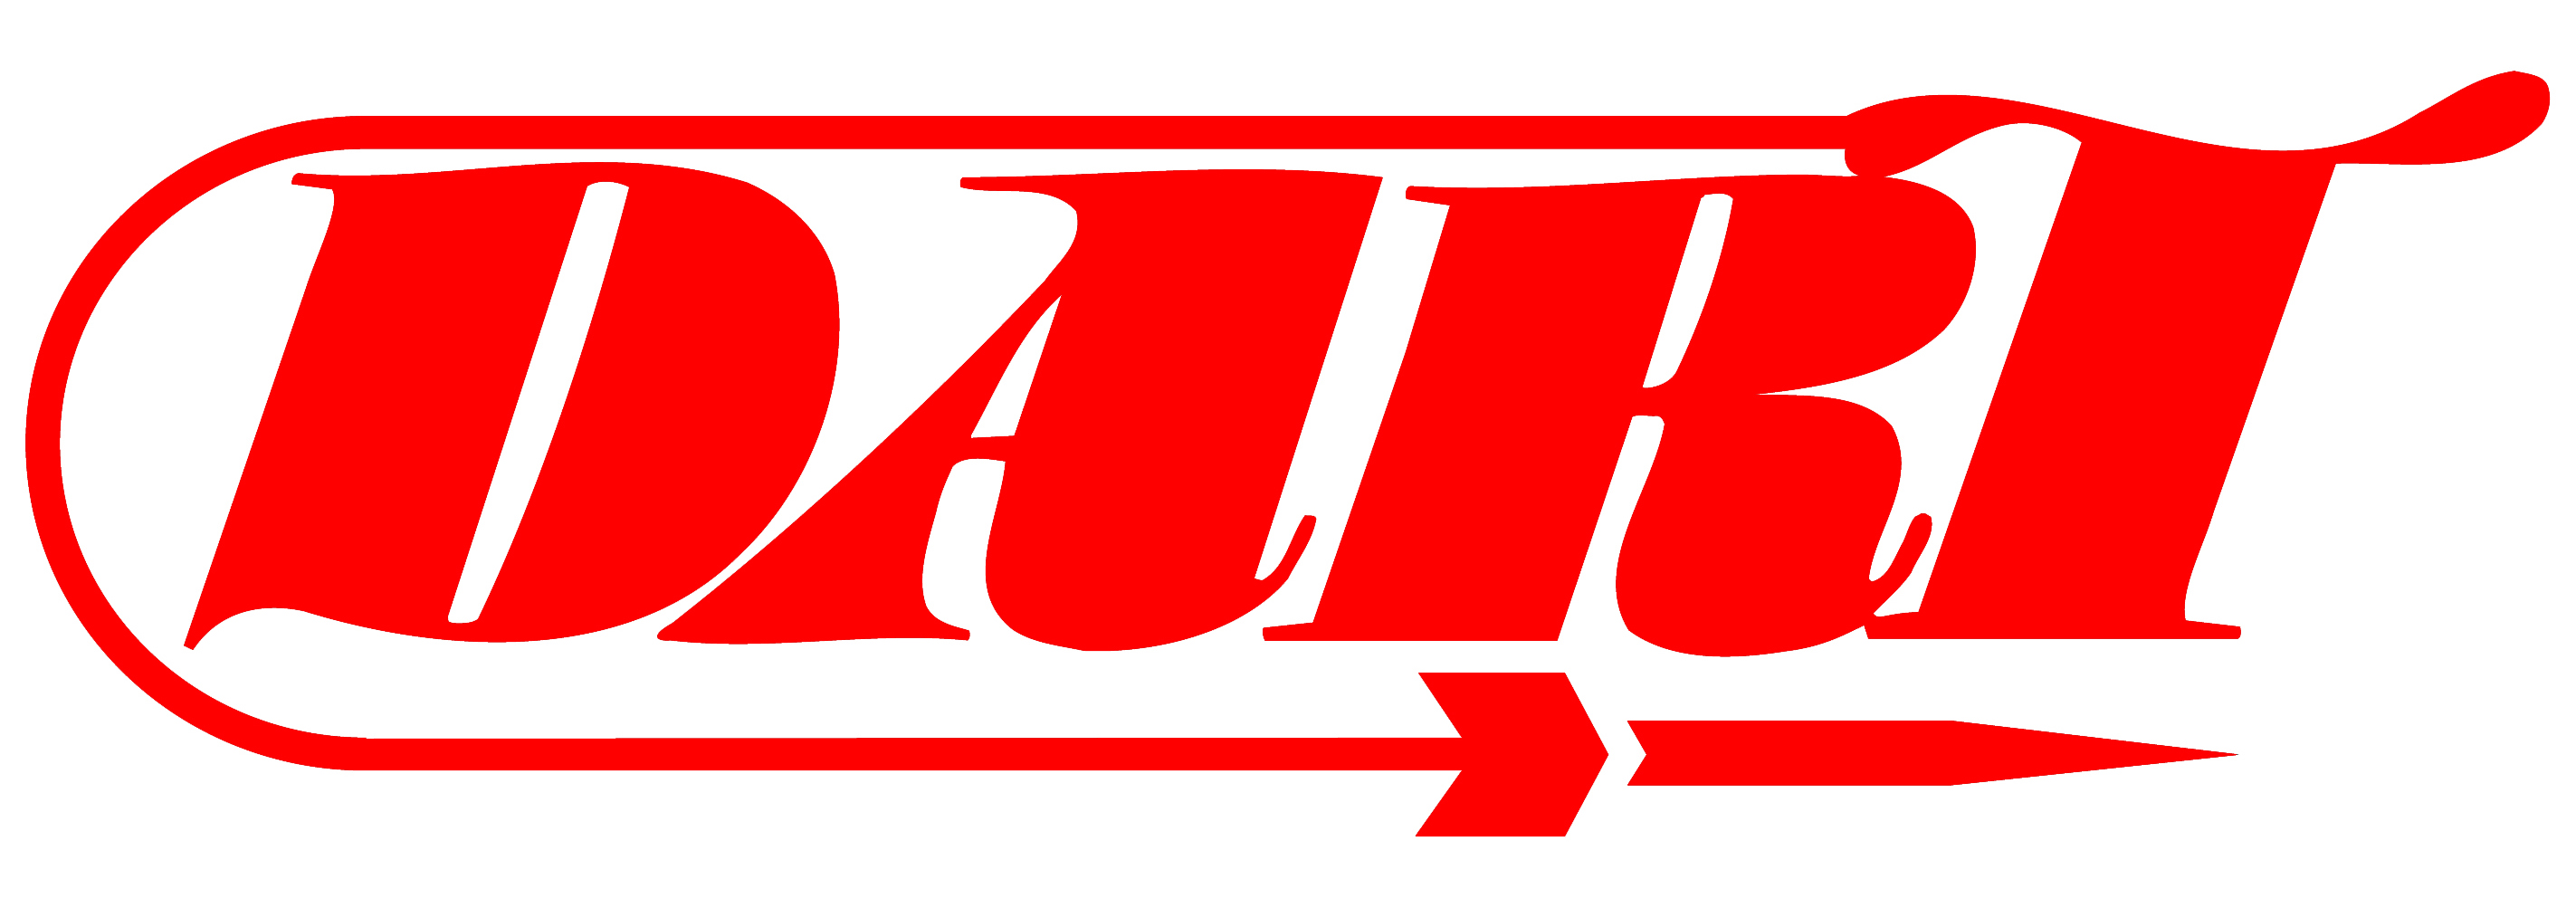 1255707554-dart-logo